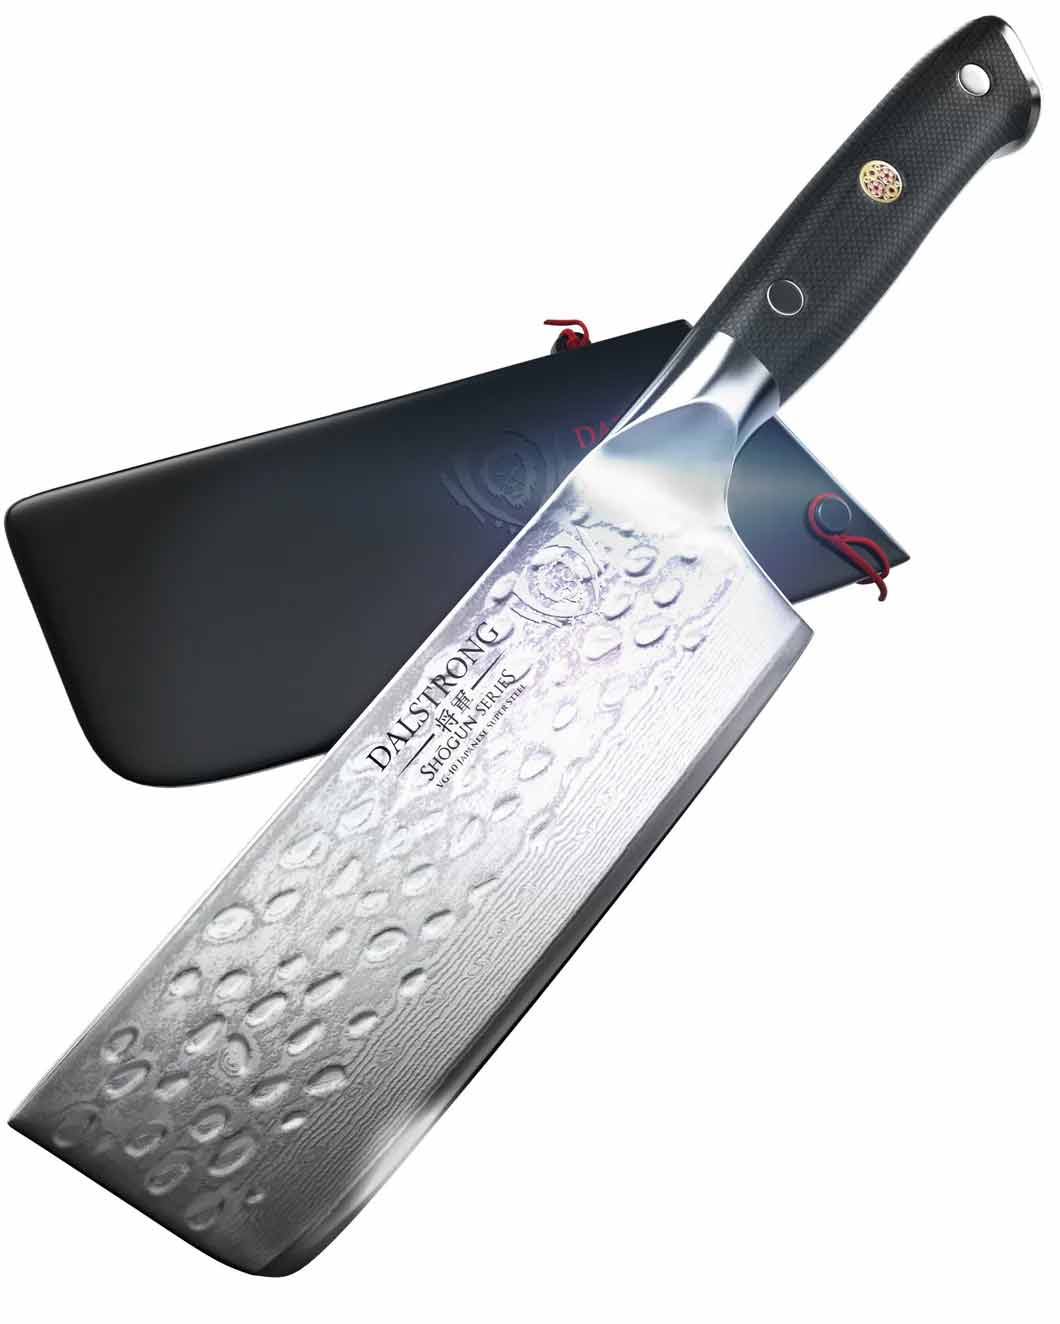 Dalstrong-6-Shogun-Series-X-Nakiri-Knife